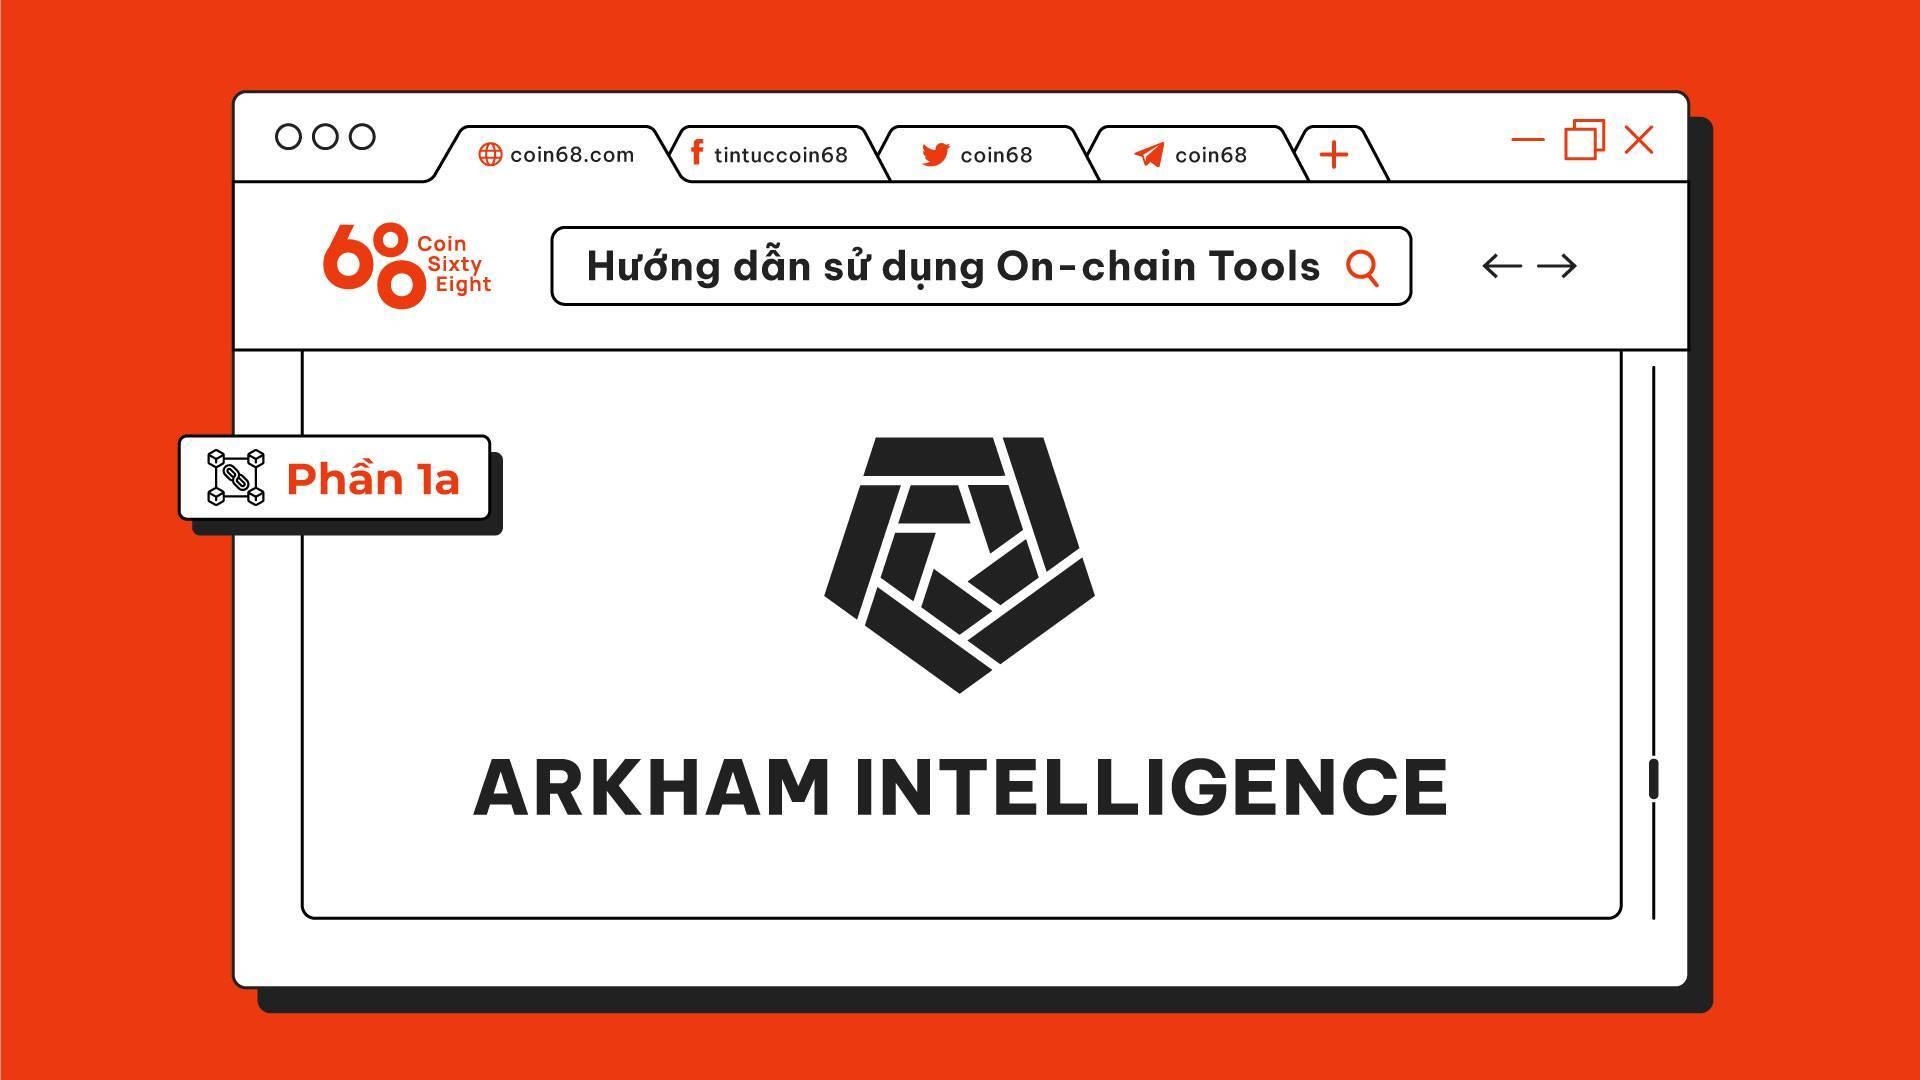 huong-dan-su-dung-on-chain-tools-phan-1a-arkham-intelligence